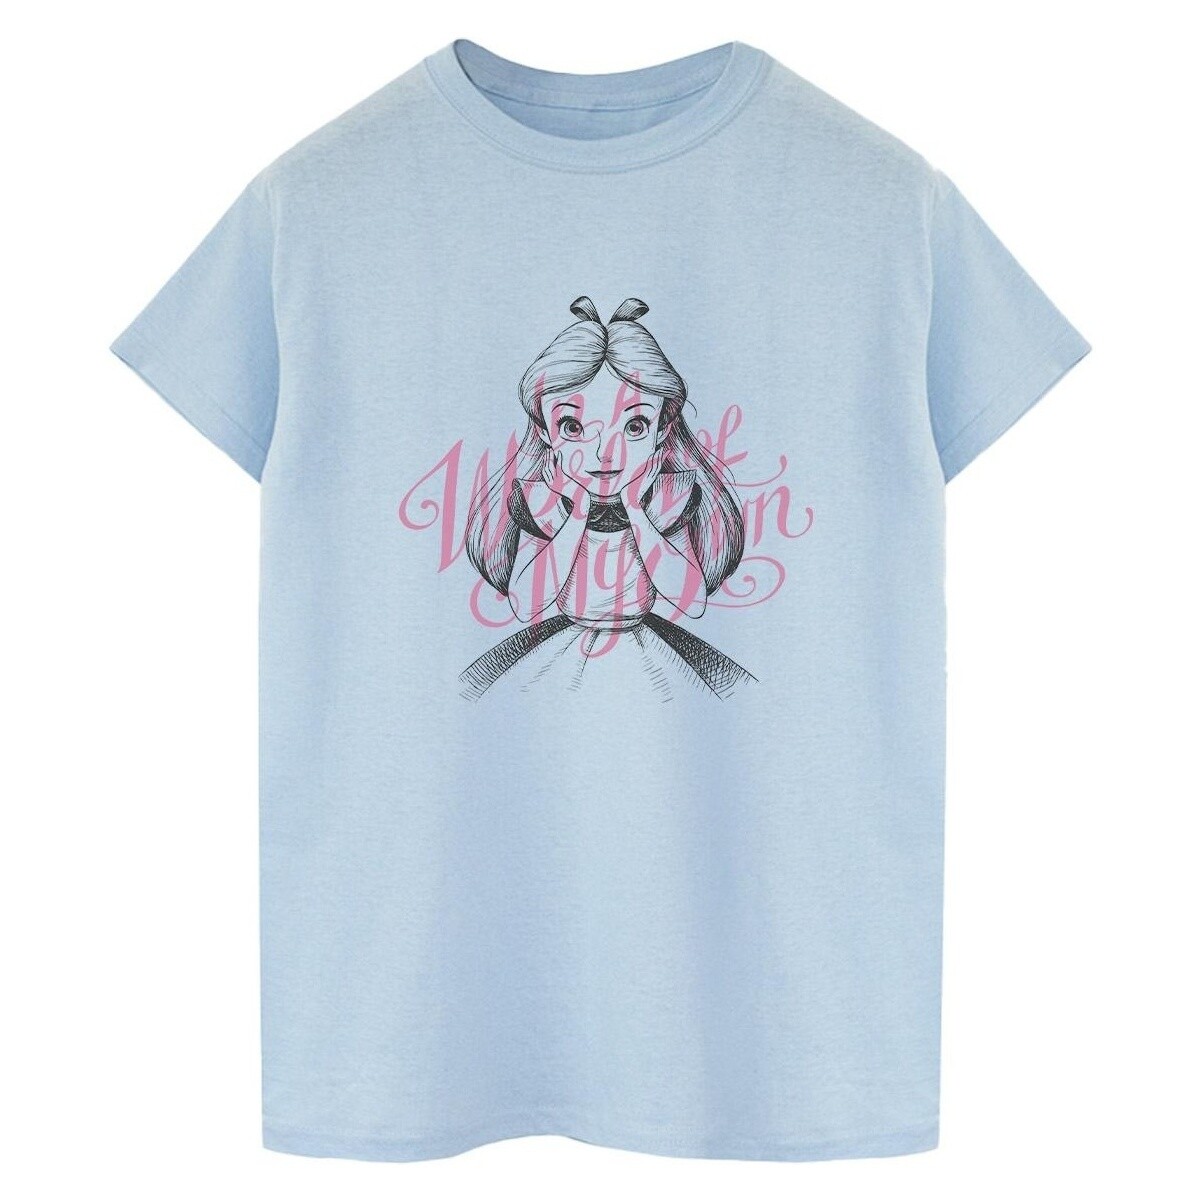 textil Mujer Camisetas manga larga Disney Alice In Wonderland In A World Of My Own Azul